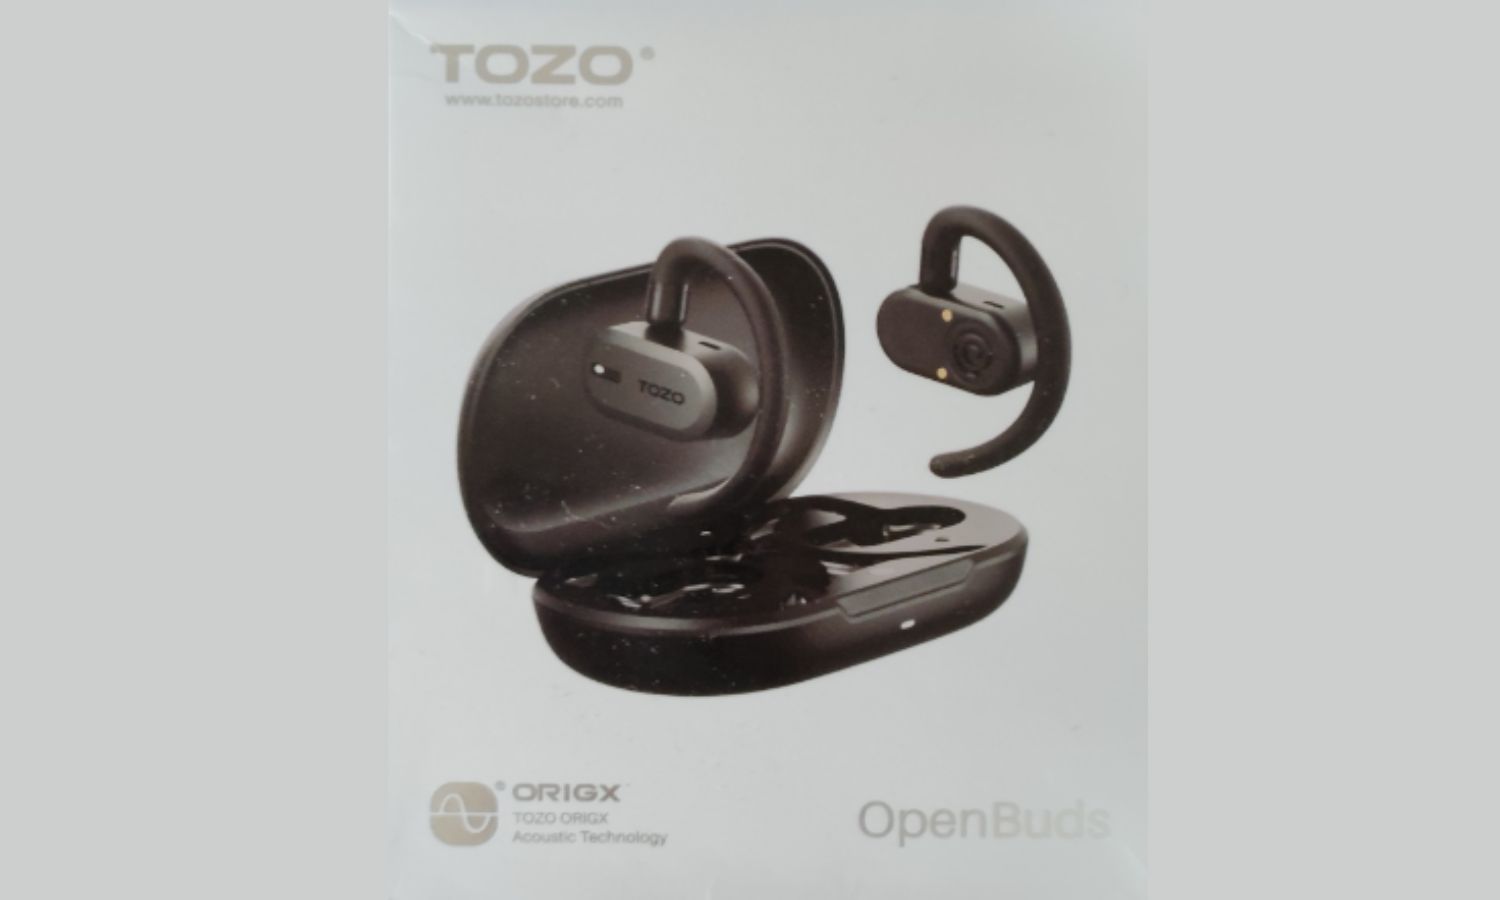 tozo open buds